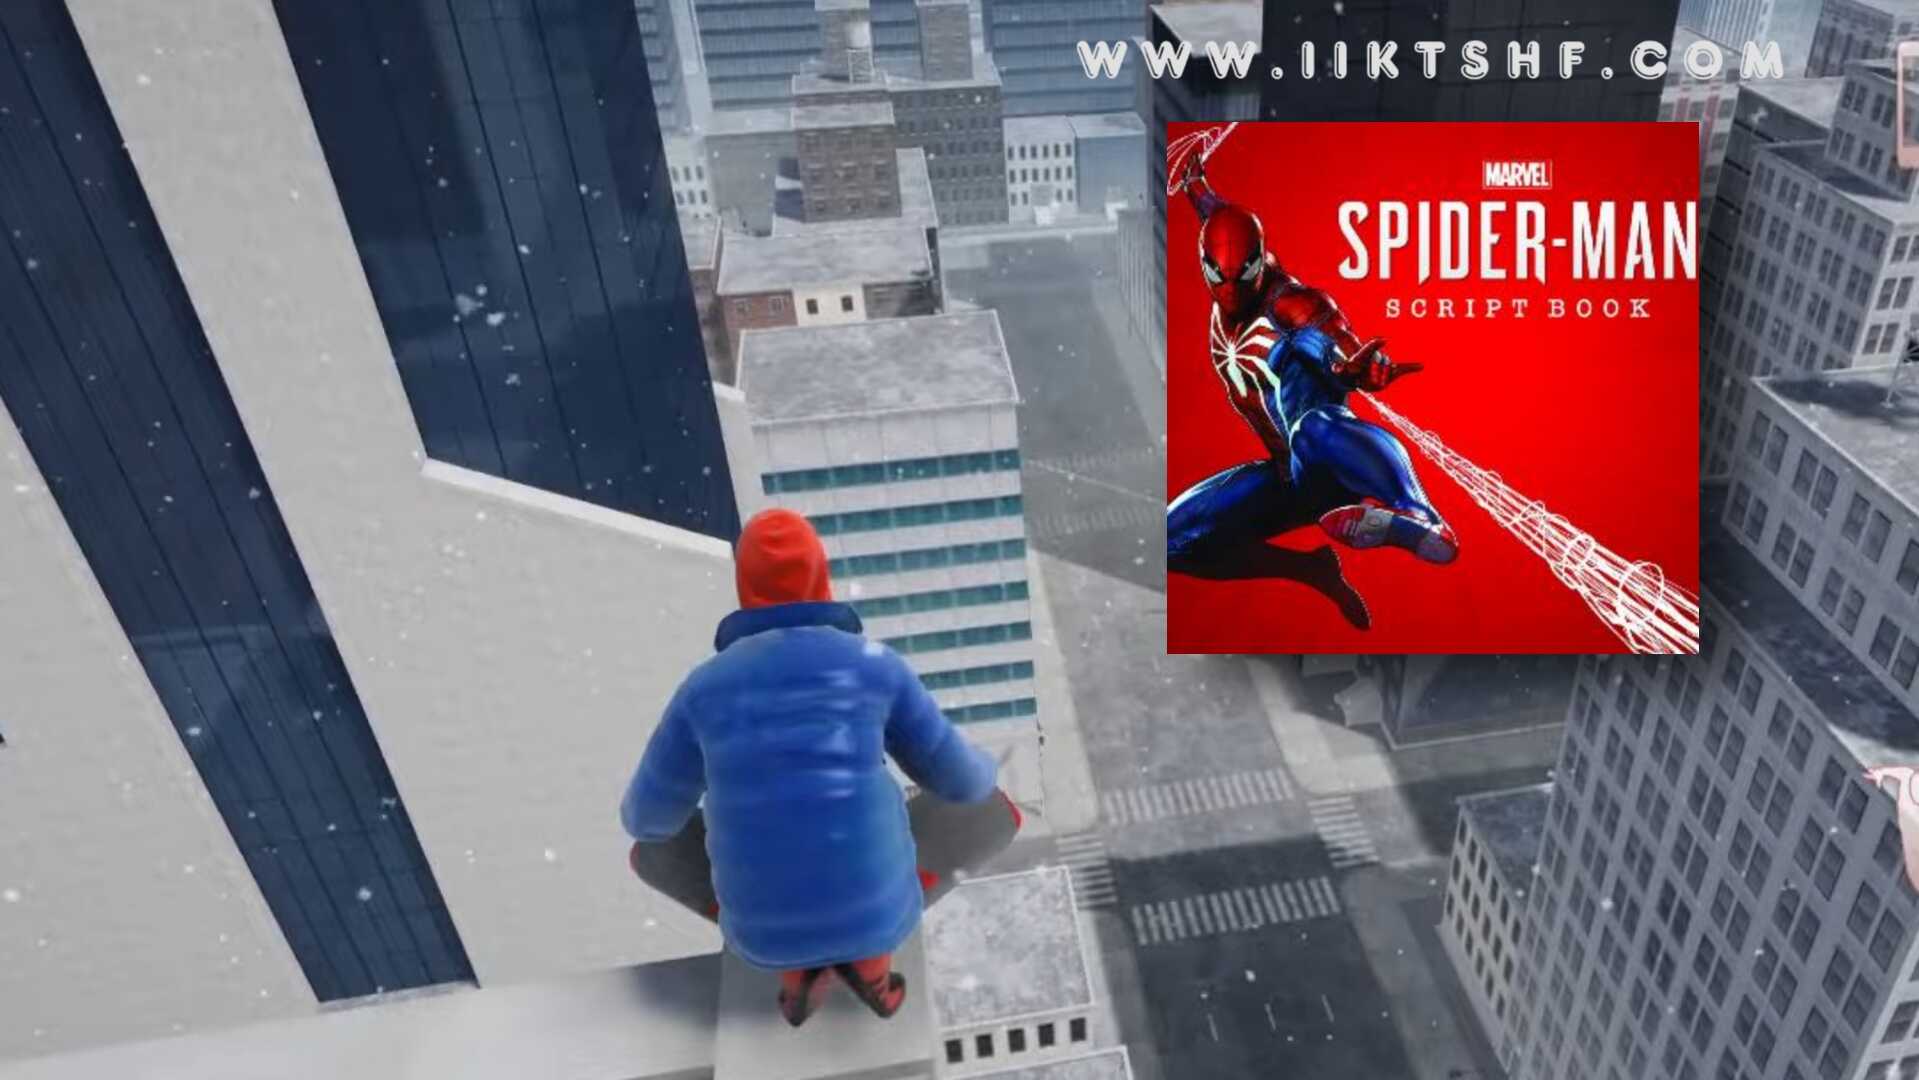 واخيرا تحميل لعبة Spider Man Mobile للاندرويد والايفون والكمبيوتر | سبيدر مان موبايل باحدث إصدار